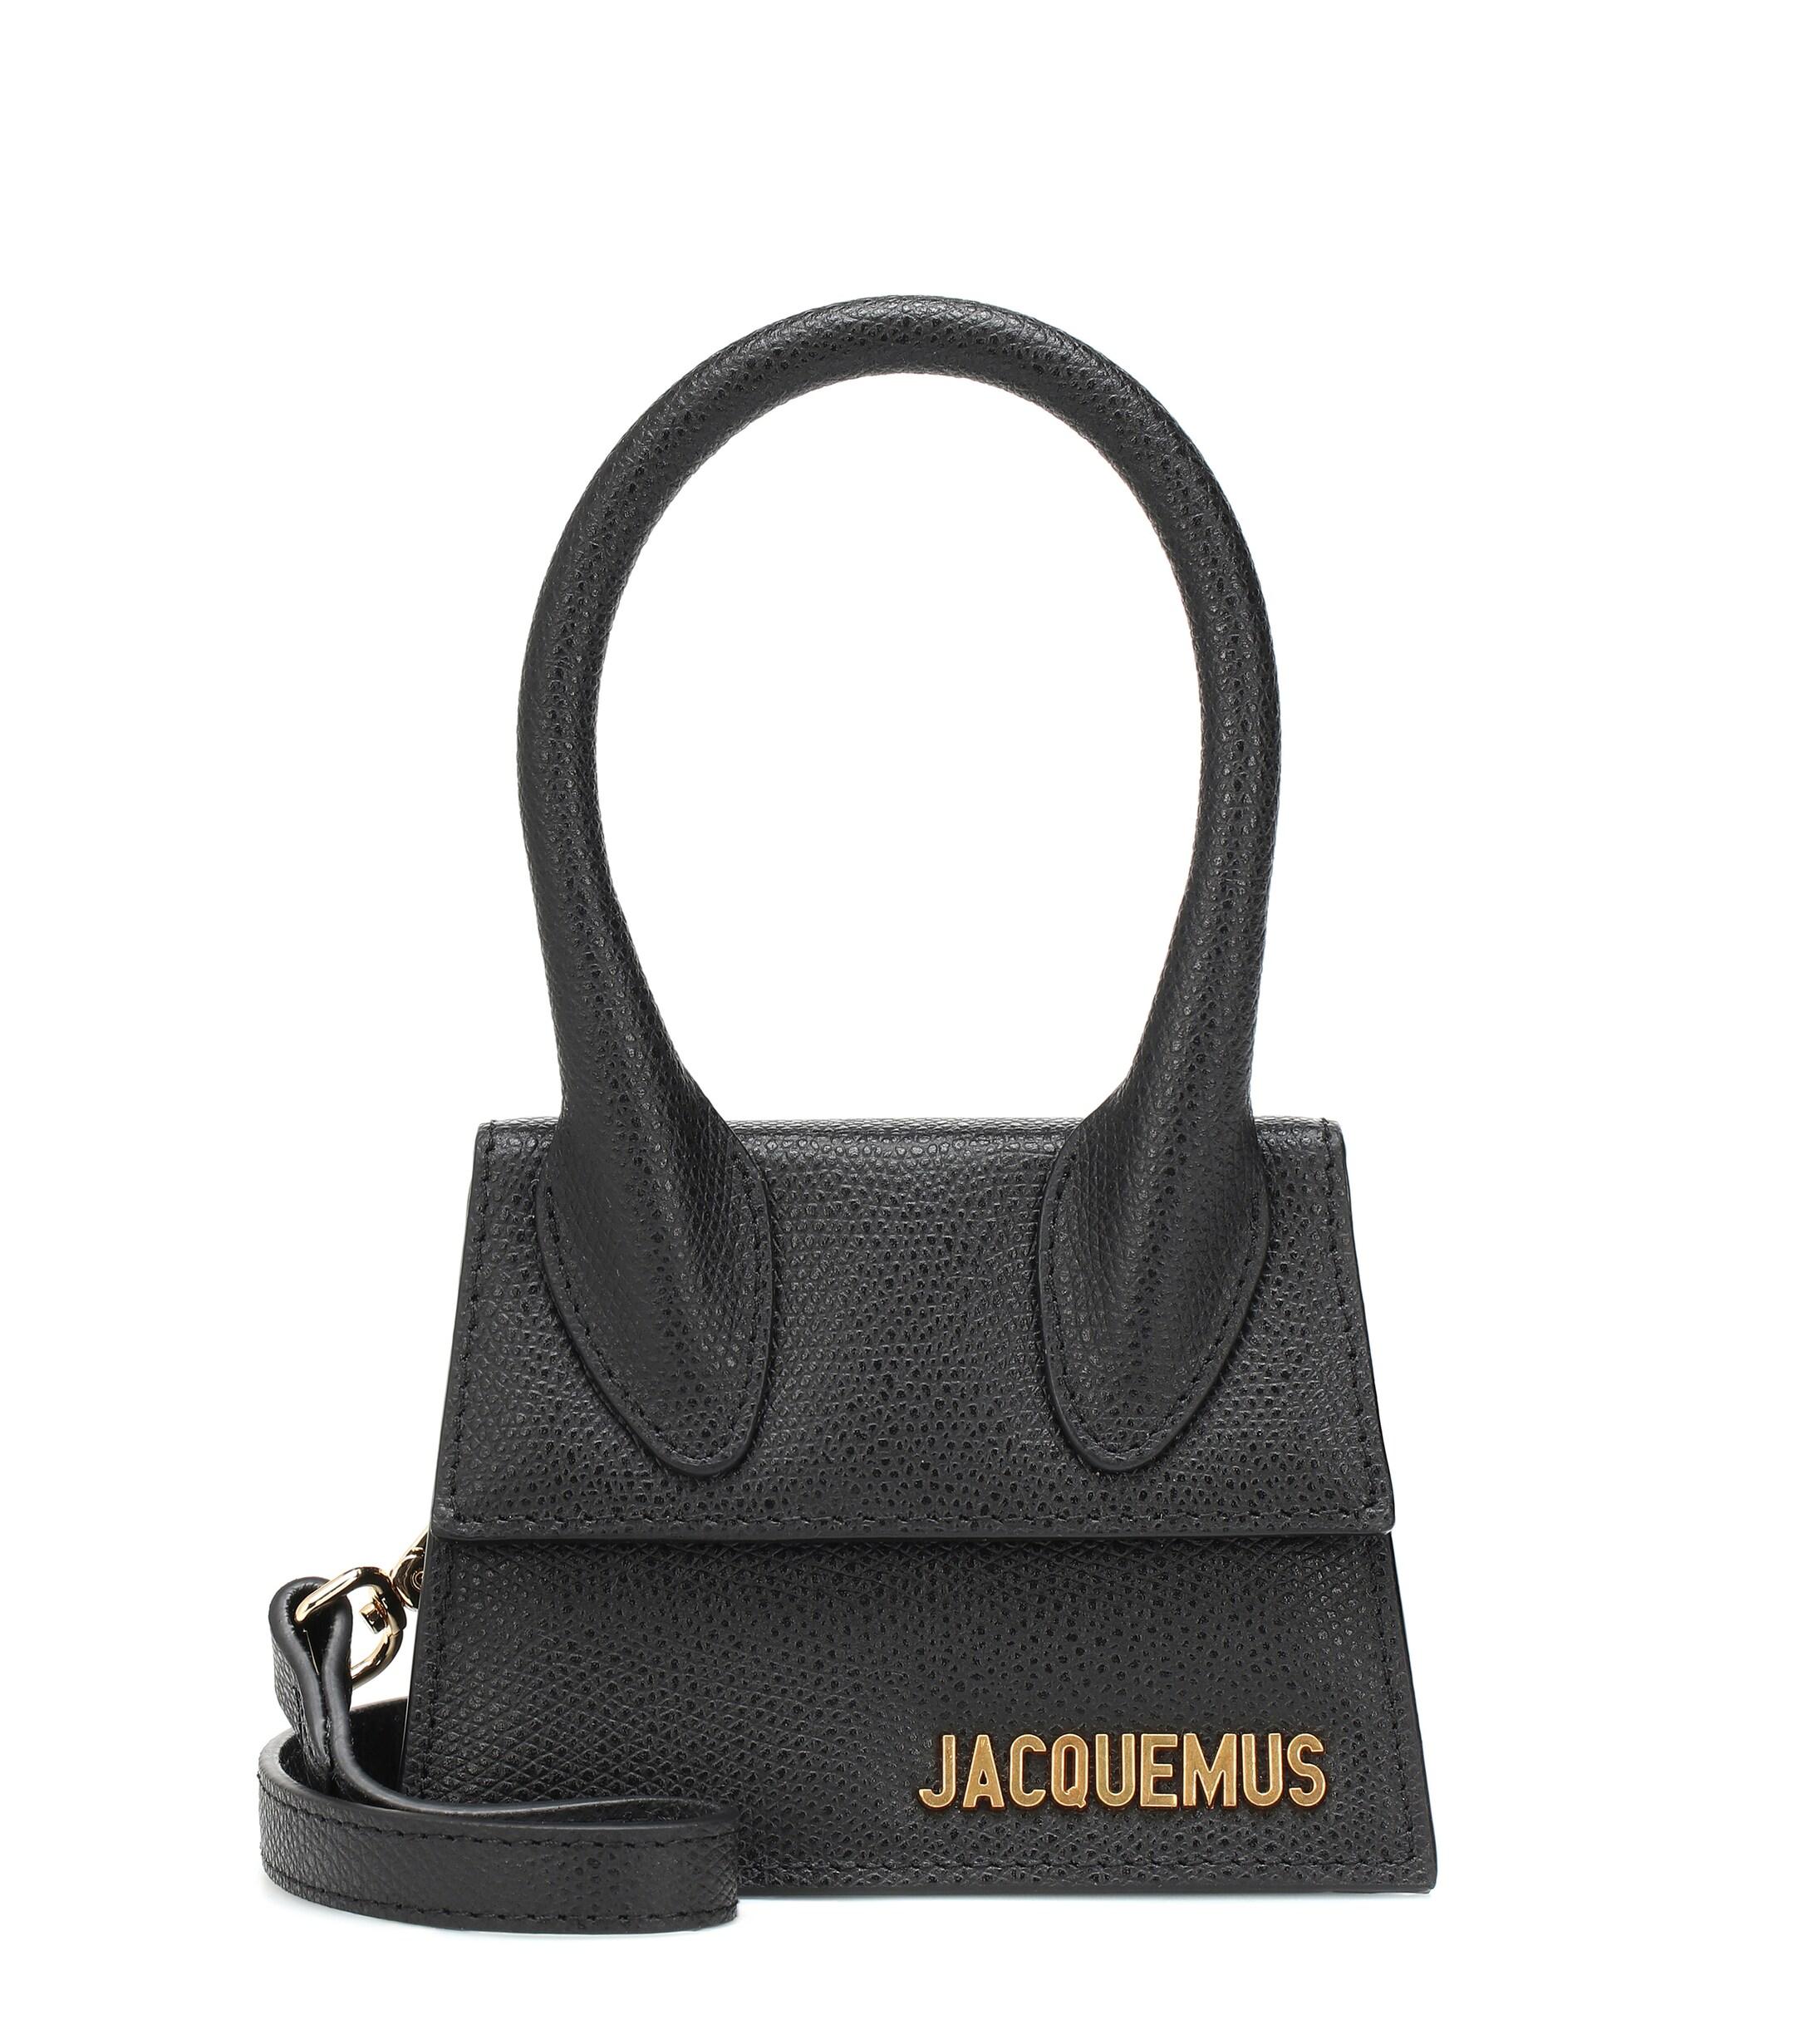 Jacquemus Le Chiquito mini tote bag - ShopStyle